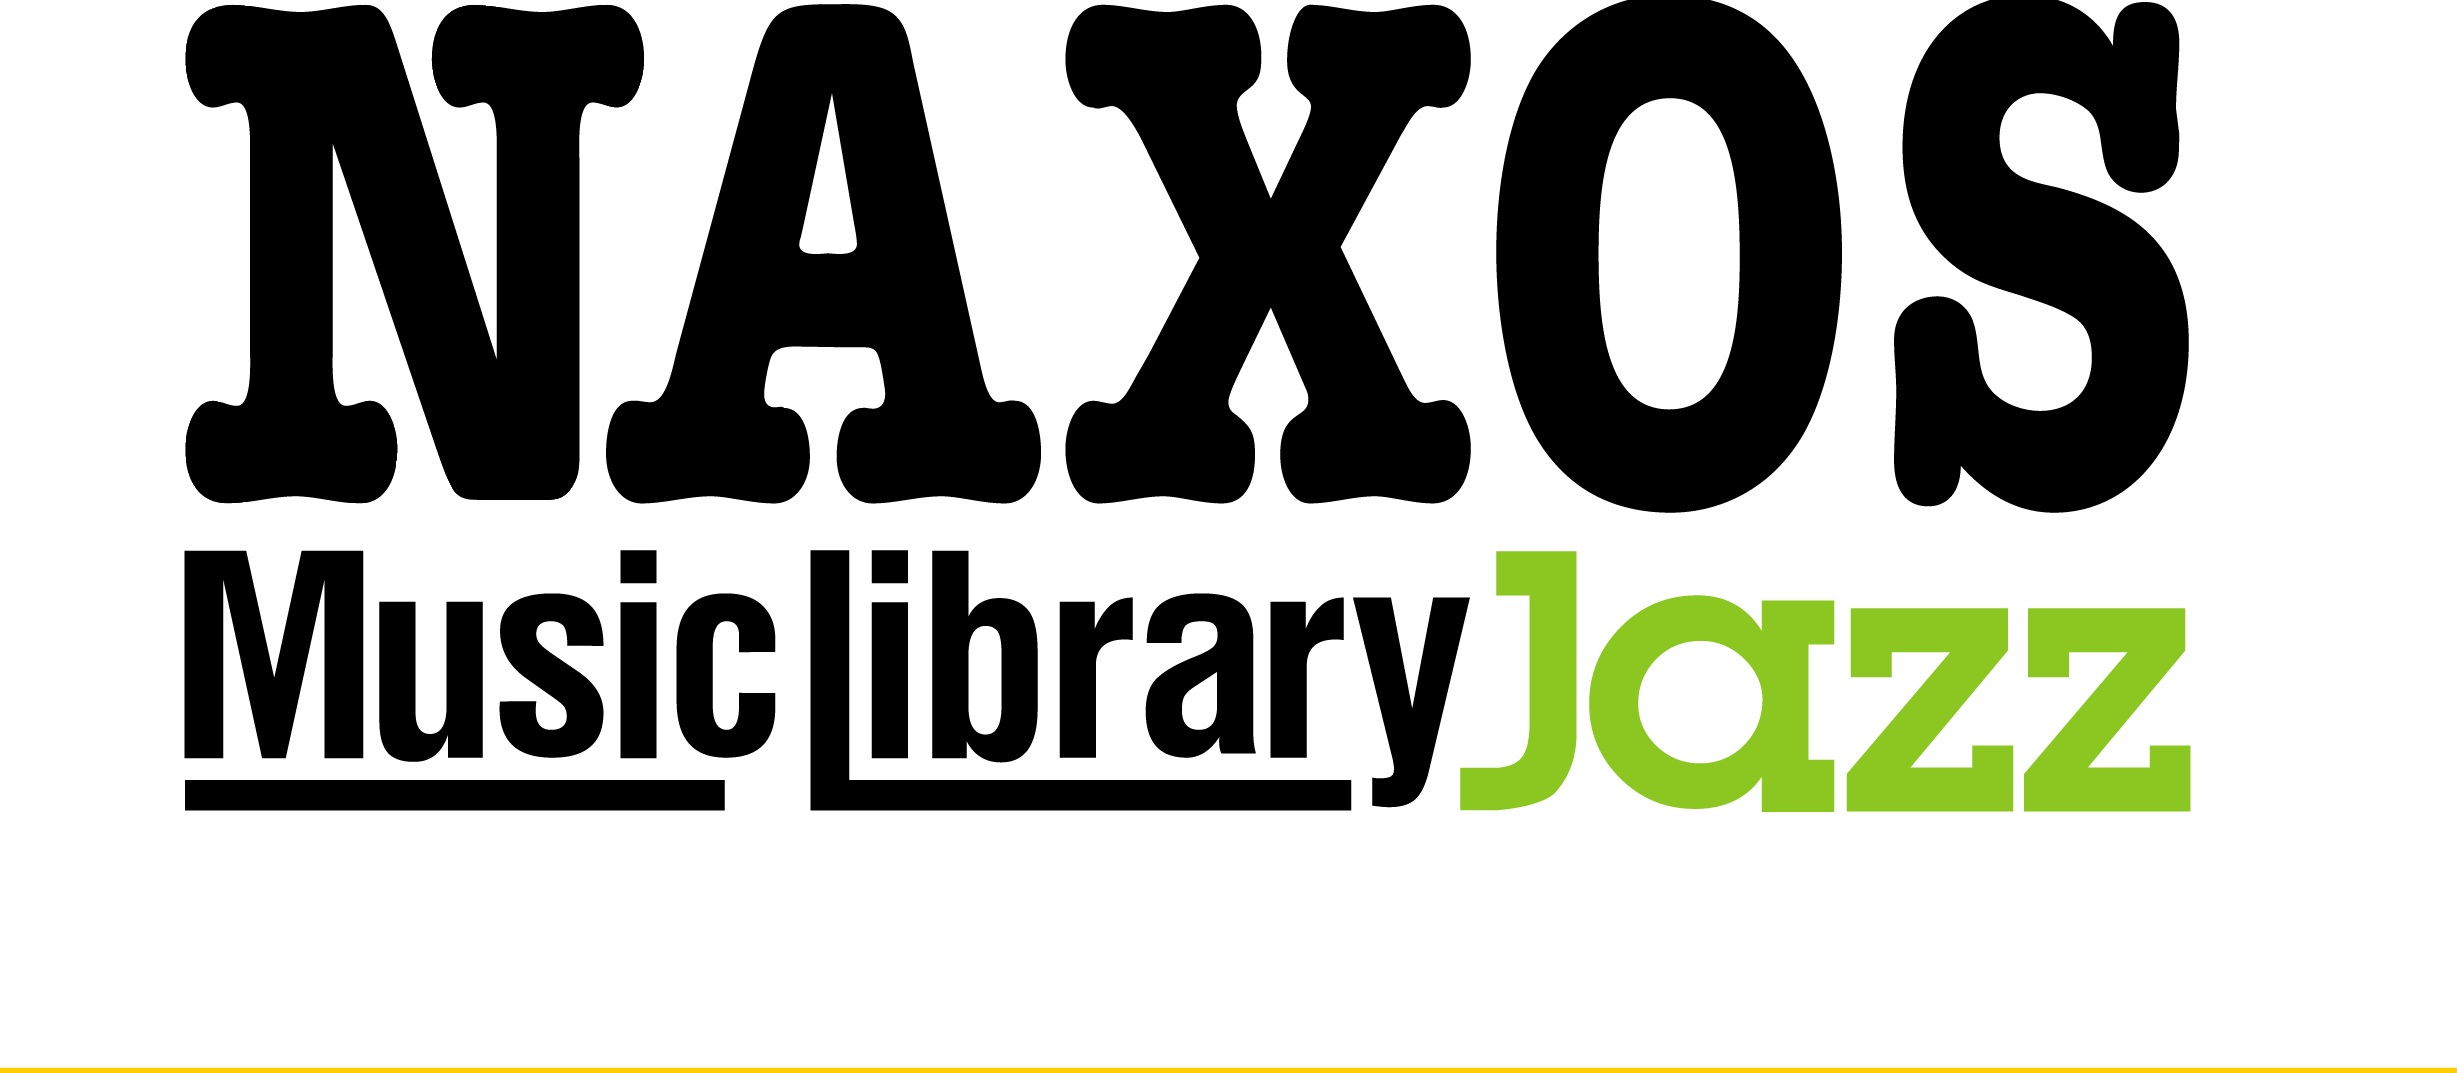 Naxos Music Library Jazz -logo